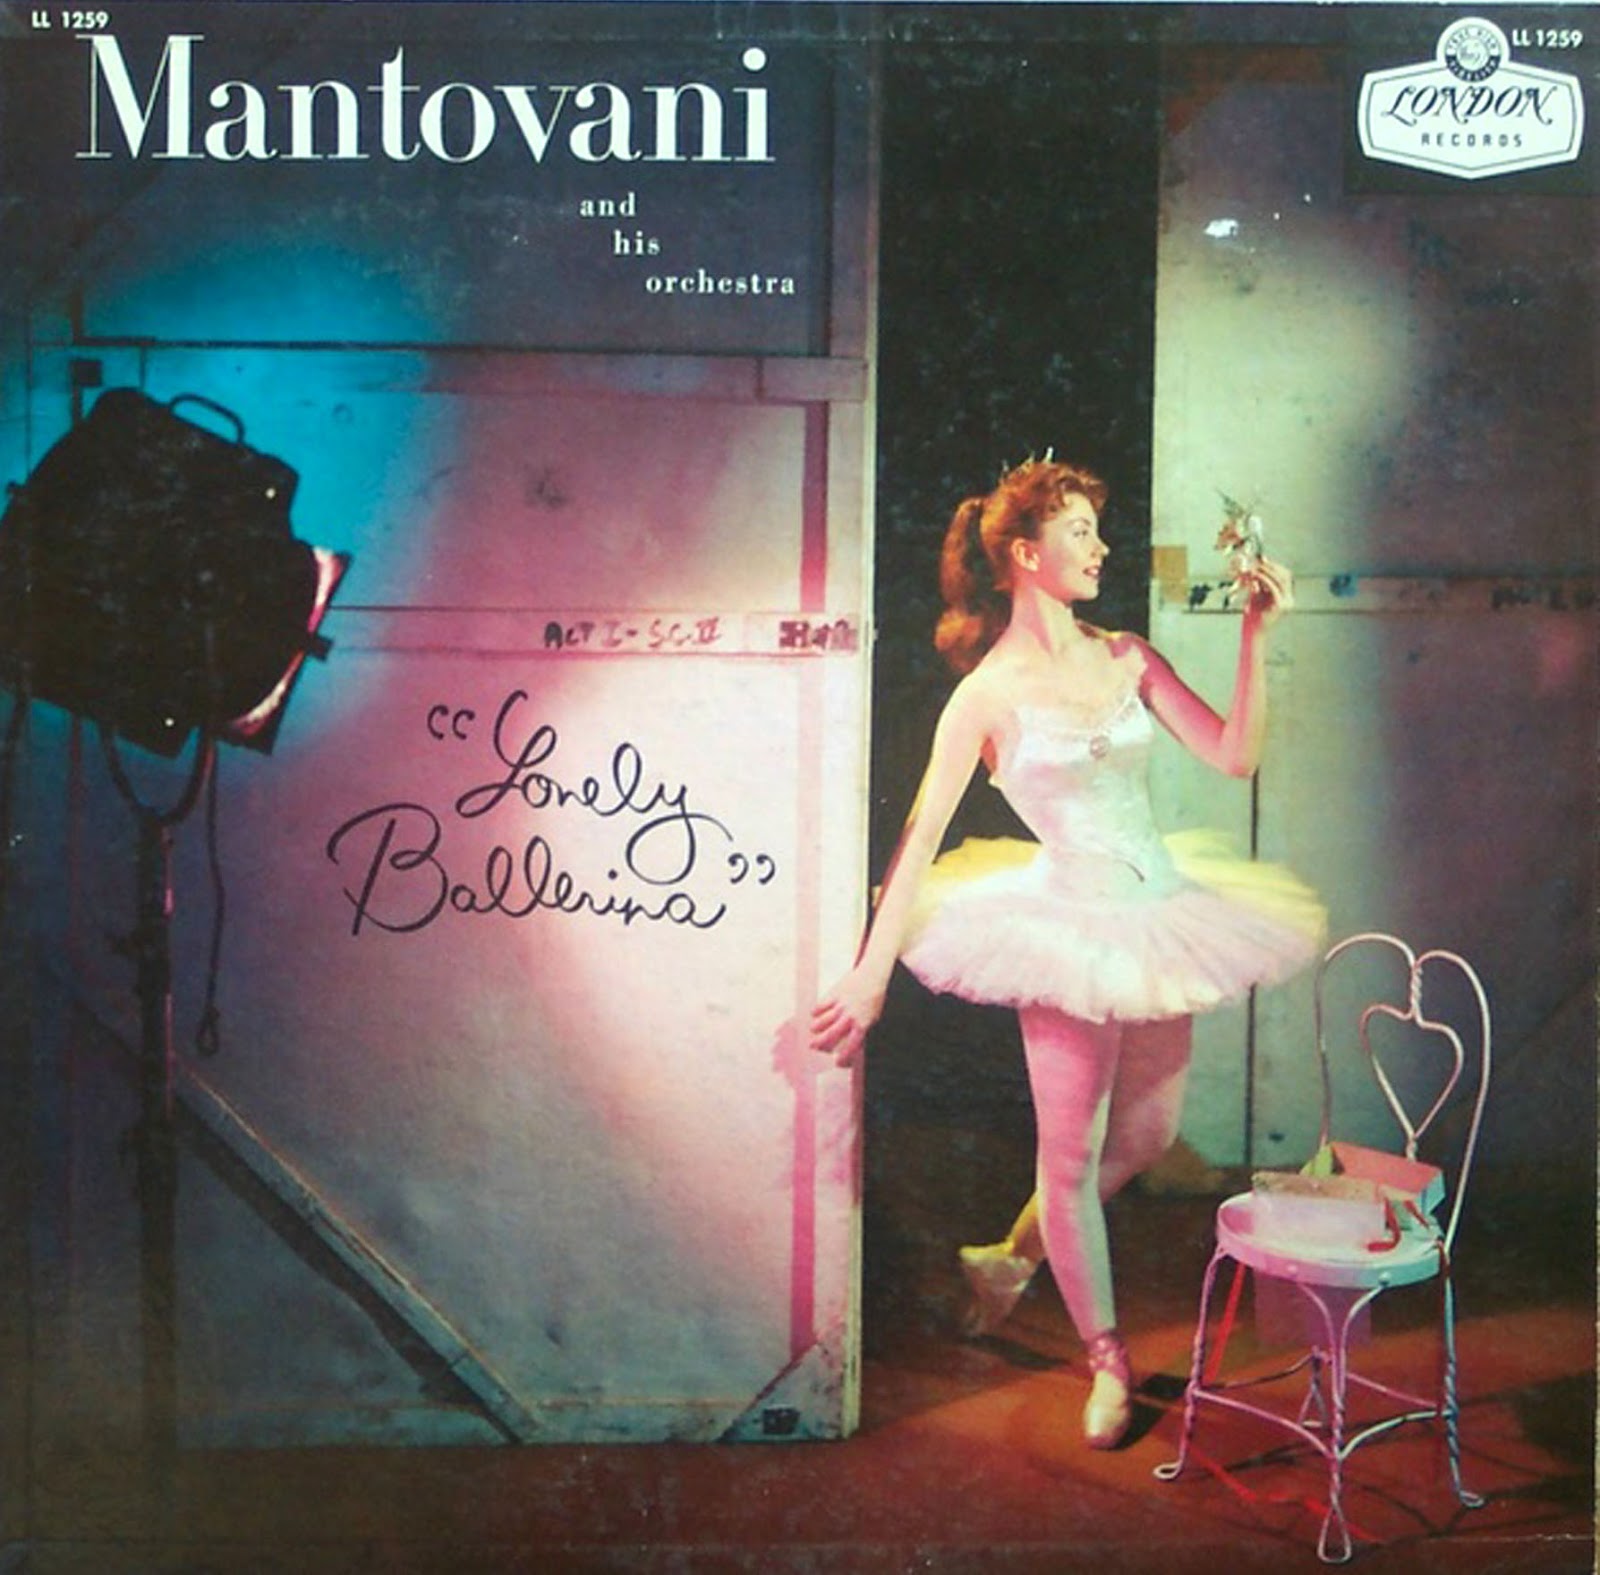 Mantovani+-+Lonelly+Ballerina+front+LL+1259.jpg